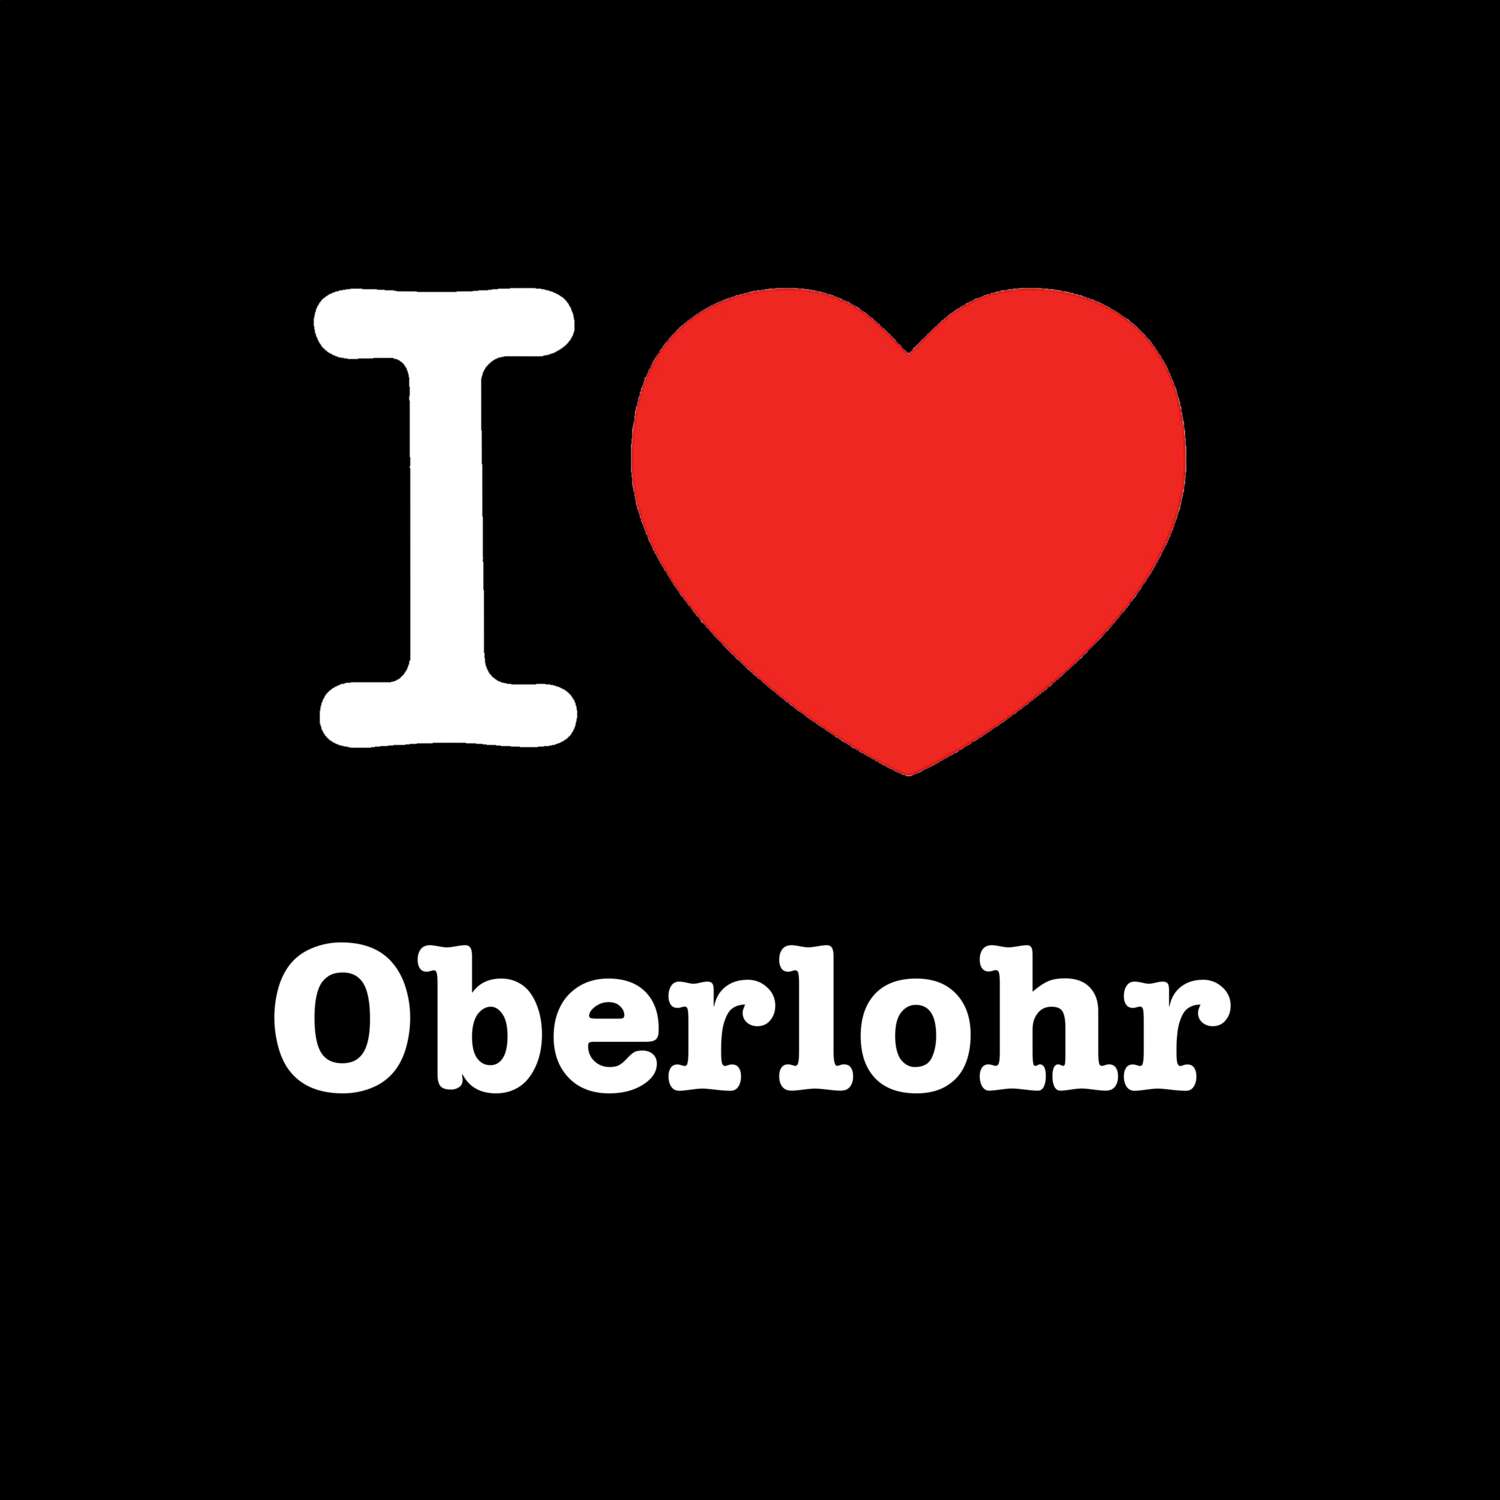 Oberlohr T-Shirt »I love«